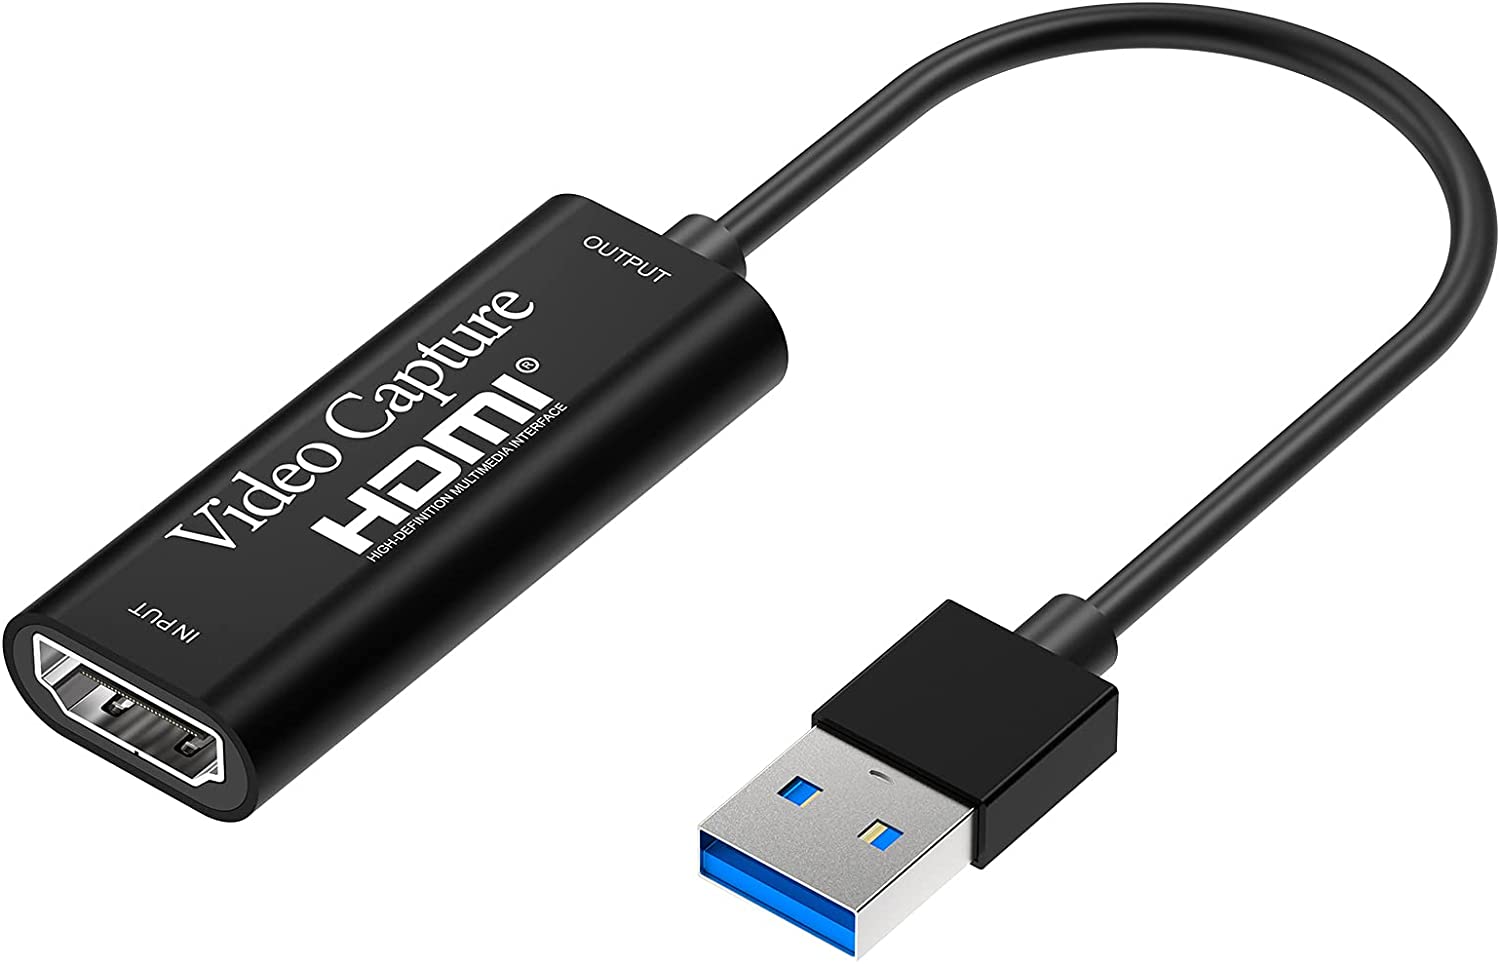 DIGITNOW! 4K Plus Video Capture Card, USB3.0 HDMI Game Capture on